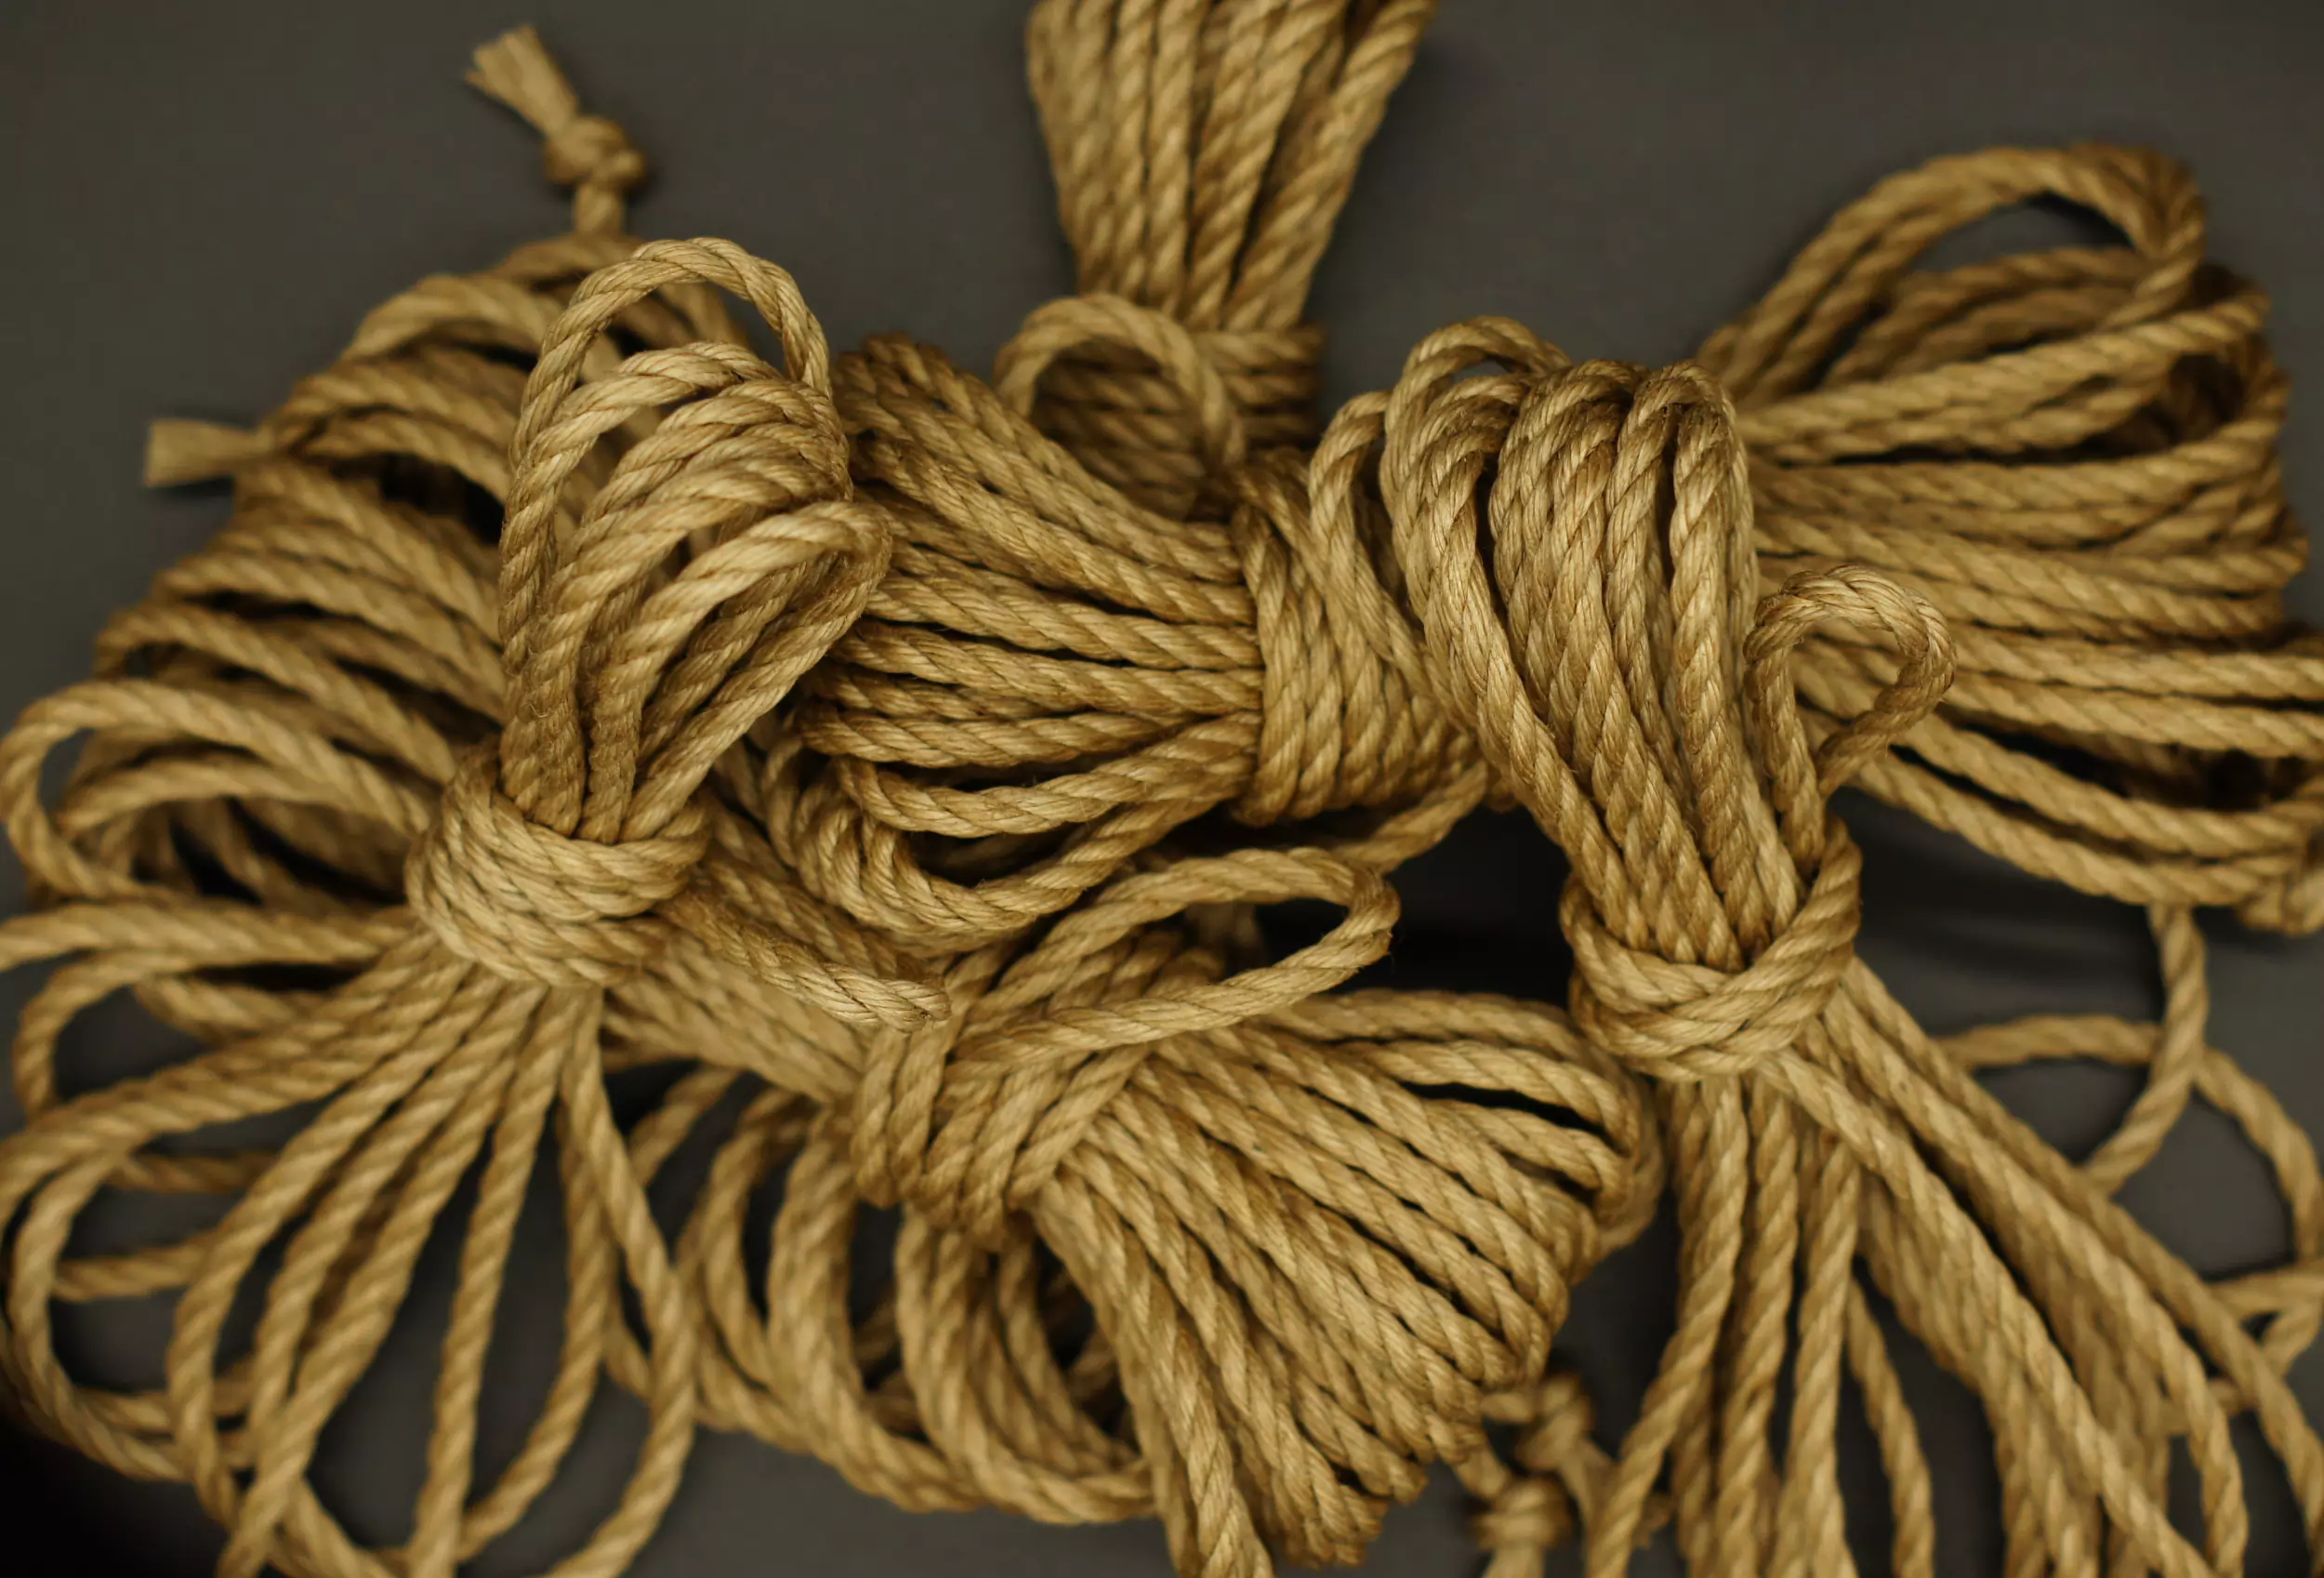 JBO-free jute ropes for Shibari, Kinbaku and rope bondage